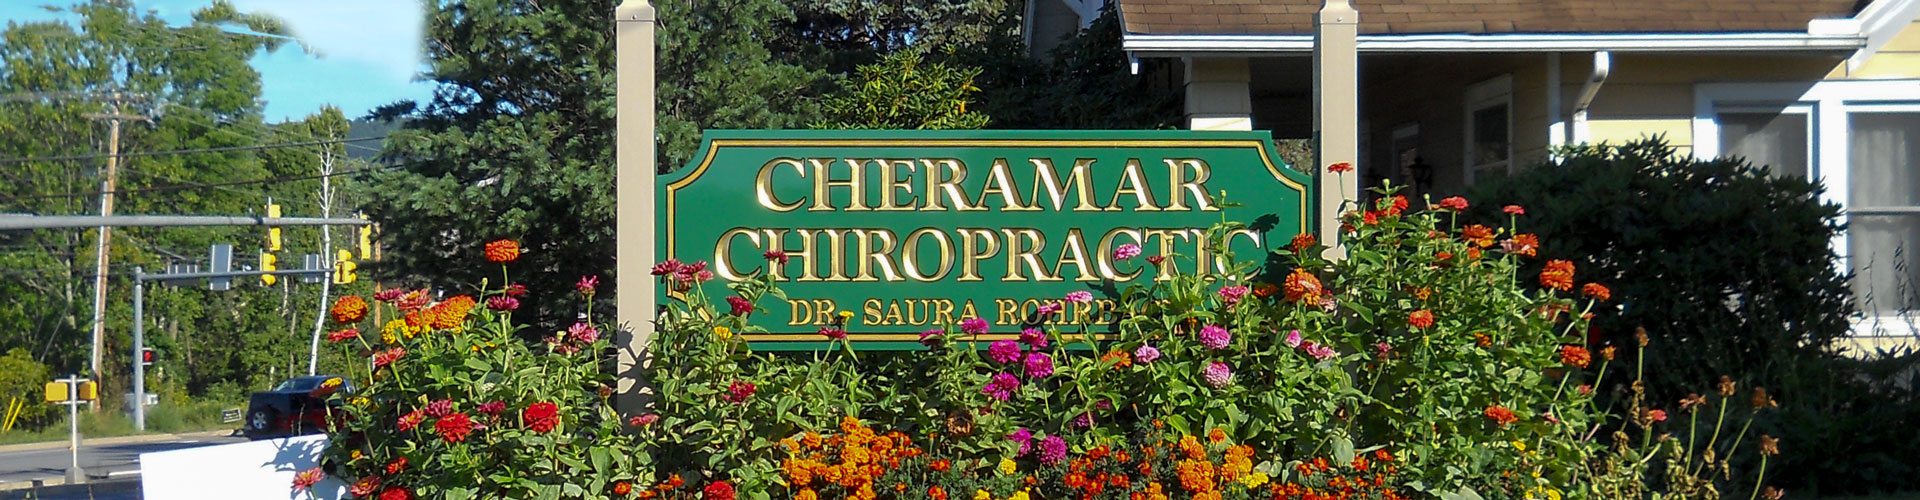 Cheramar Chiropractic - Sugarloaf, PA